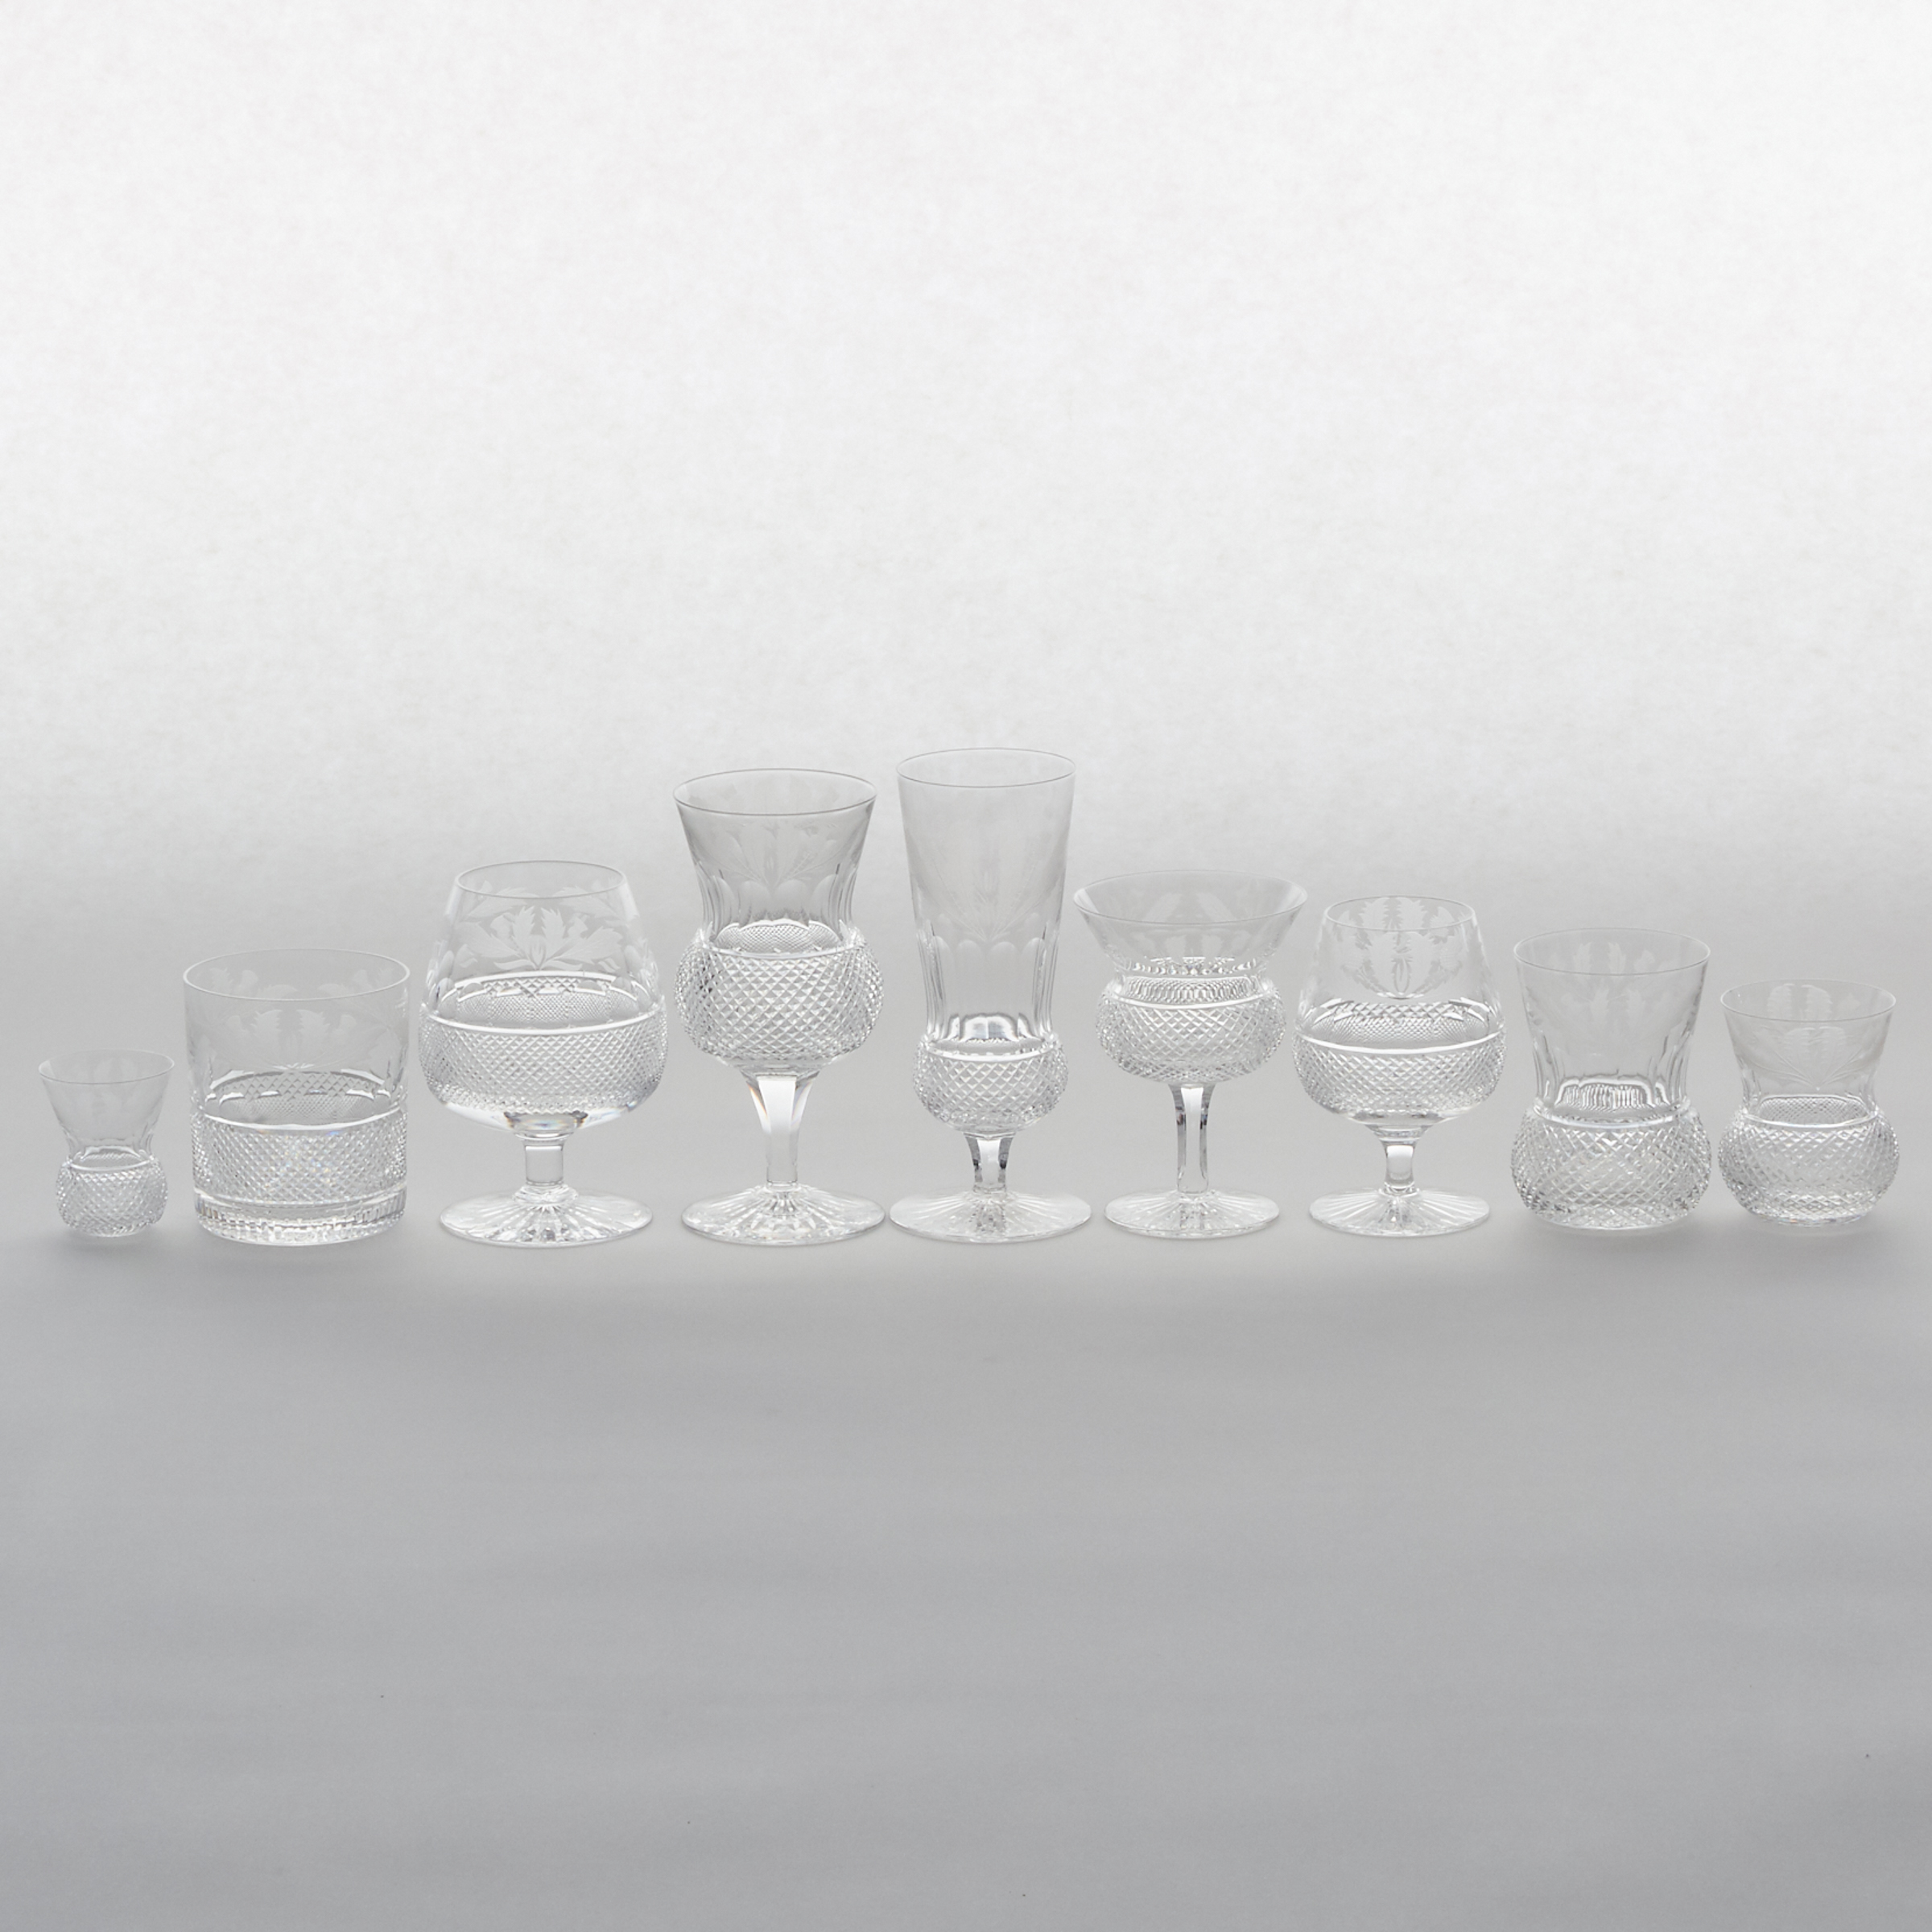 Edinburgh Crystal 'Thistle' Pattern Cut Glass Stemware, 20th century